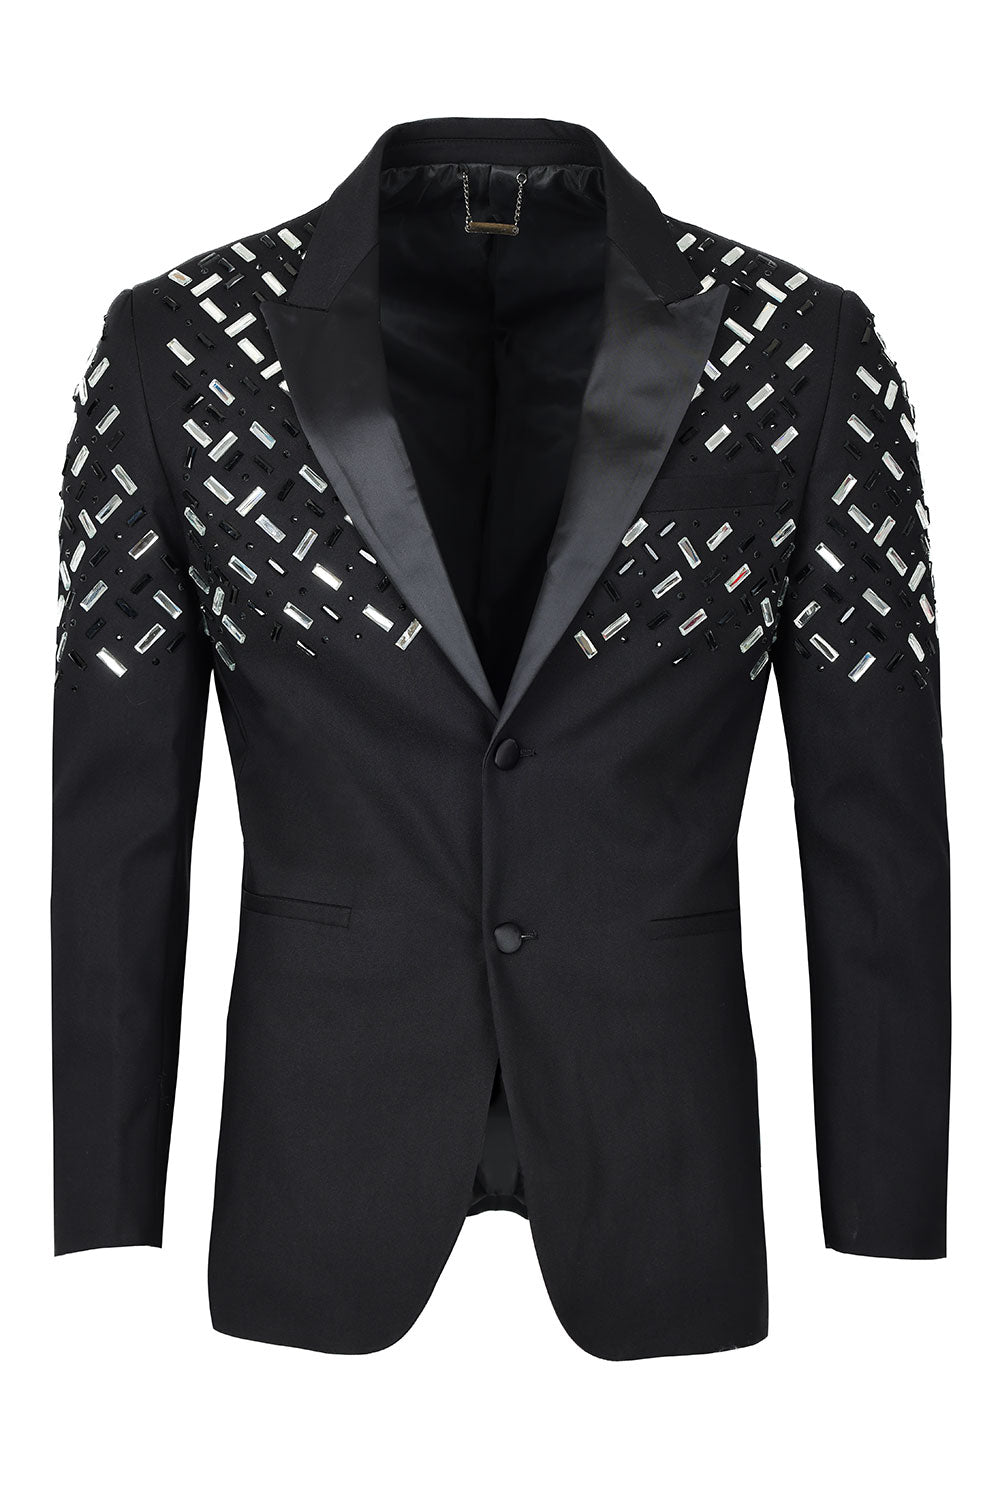 Barabas Men's Rhinestone Jewels Notch Lapel Luxury blazer 2EBL4 Black